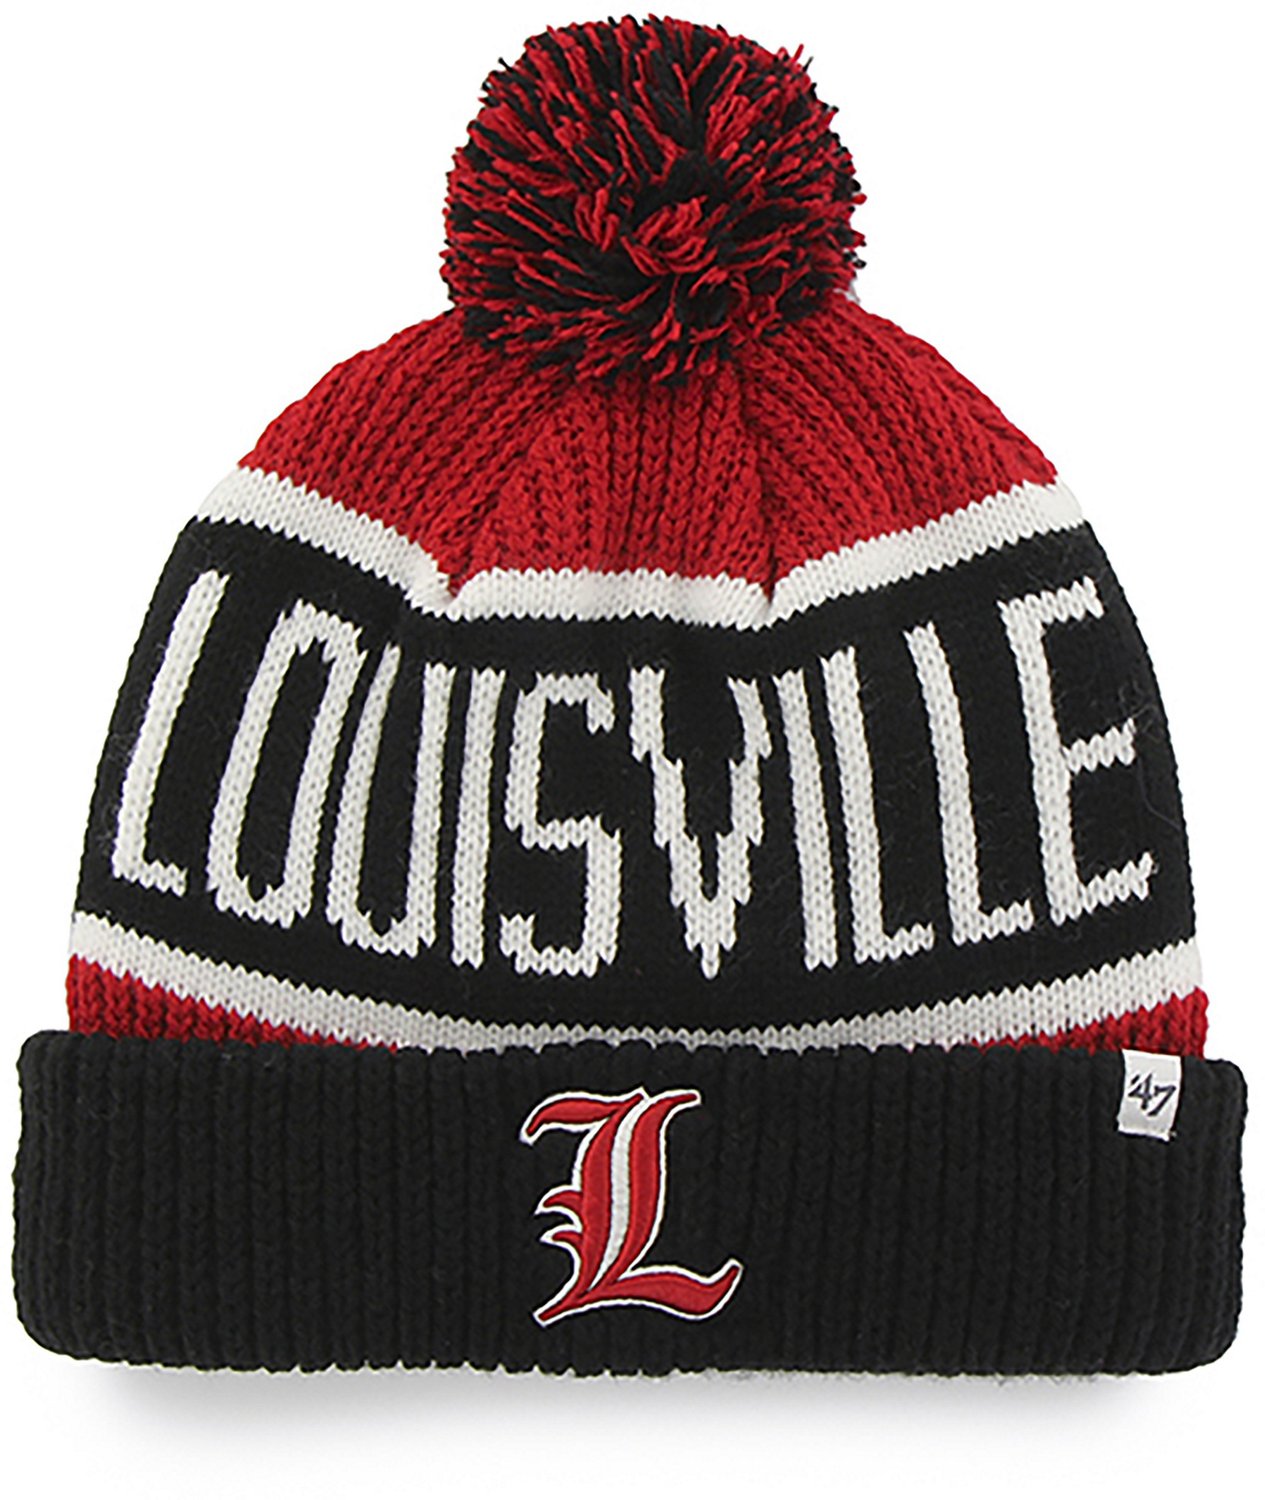 University of Louisville Khaki & Red Classic Cap